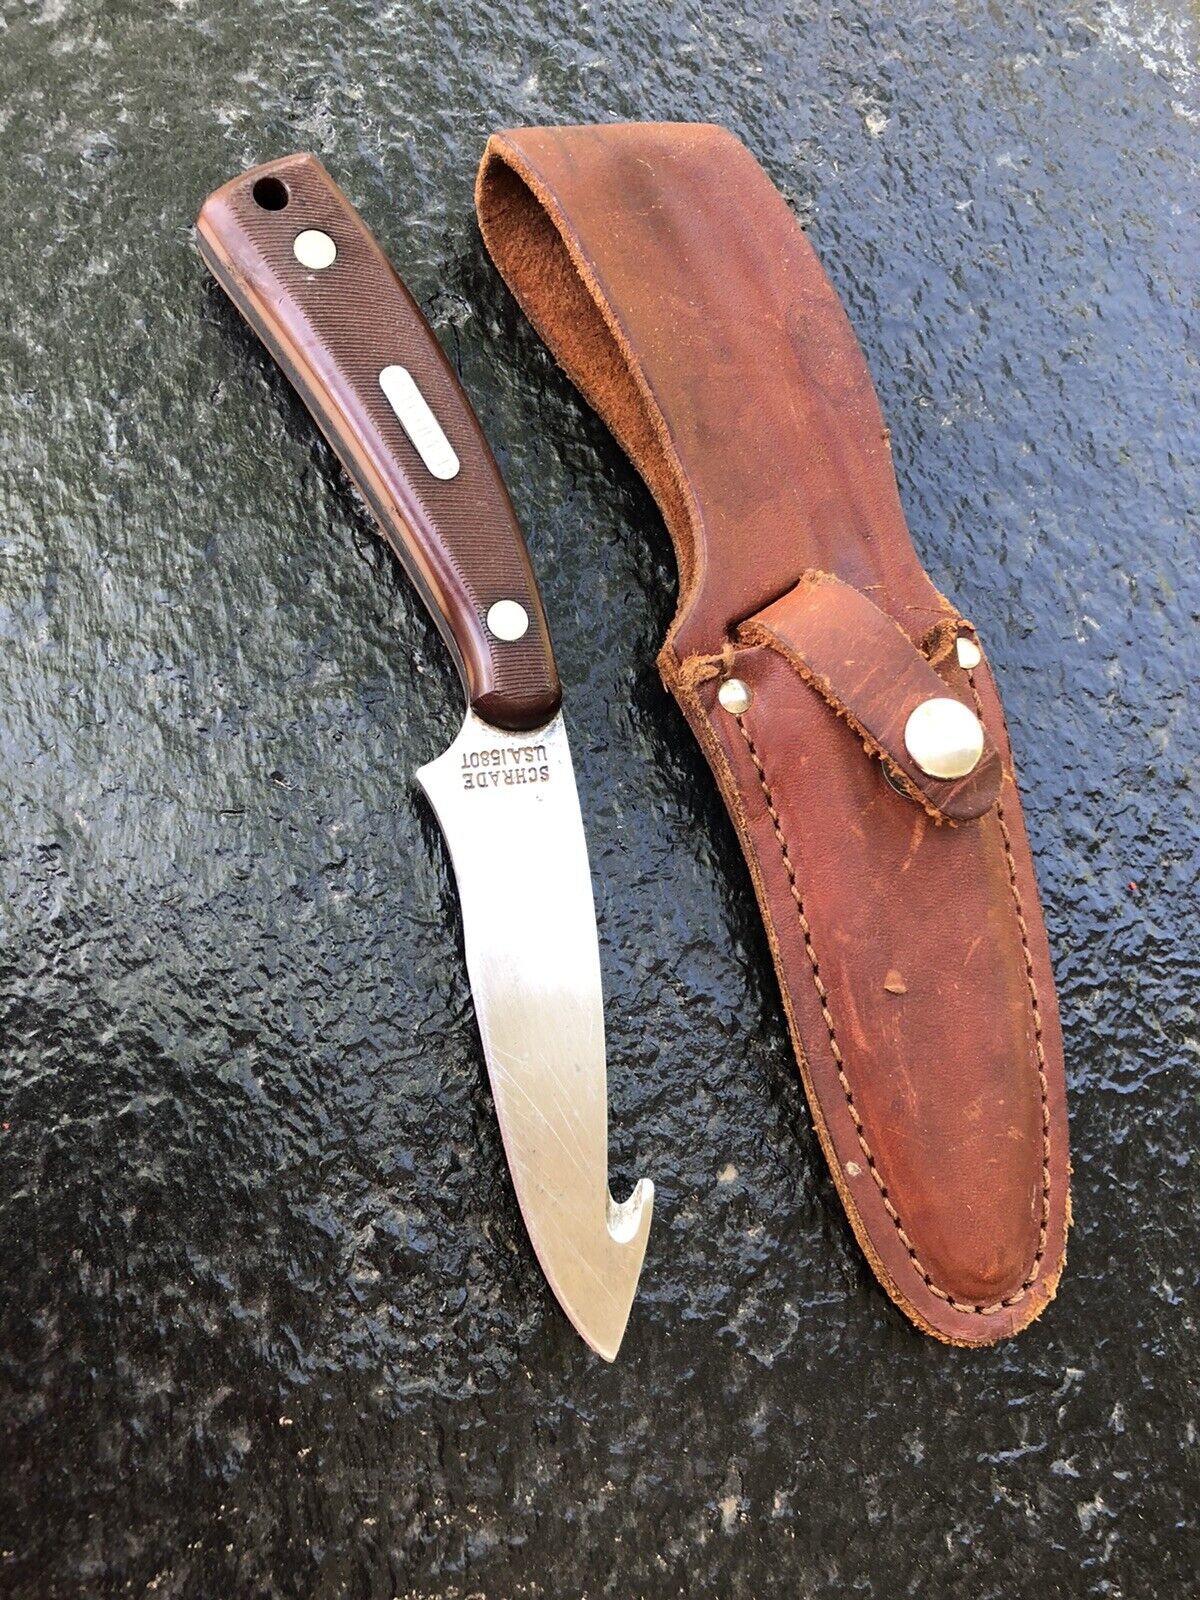 Vintage Schrade Old Timer 1580T gut hook hunting skinning knife with sheath